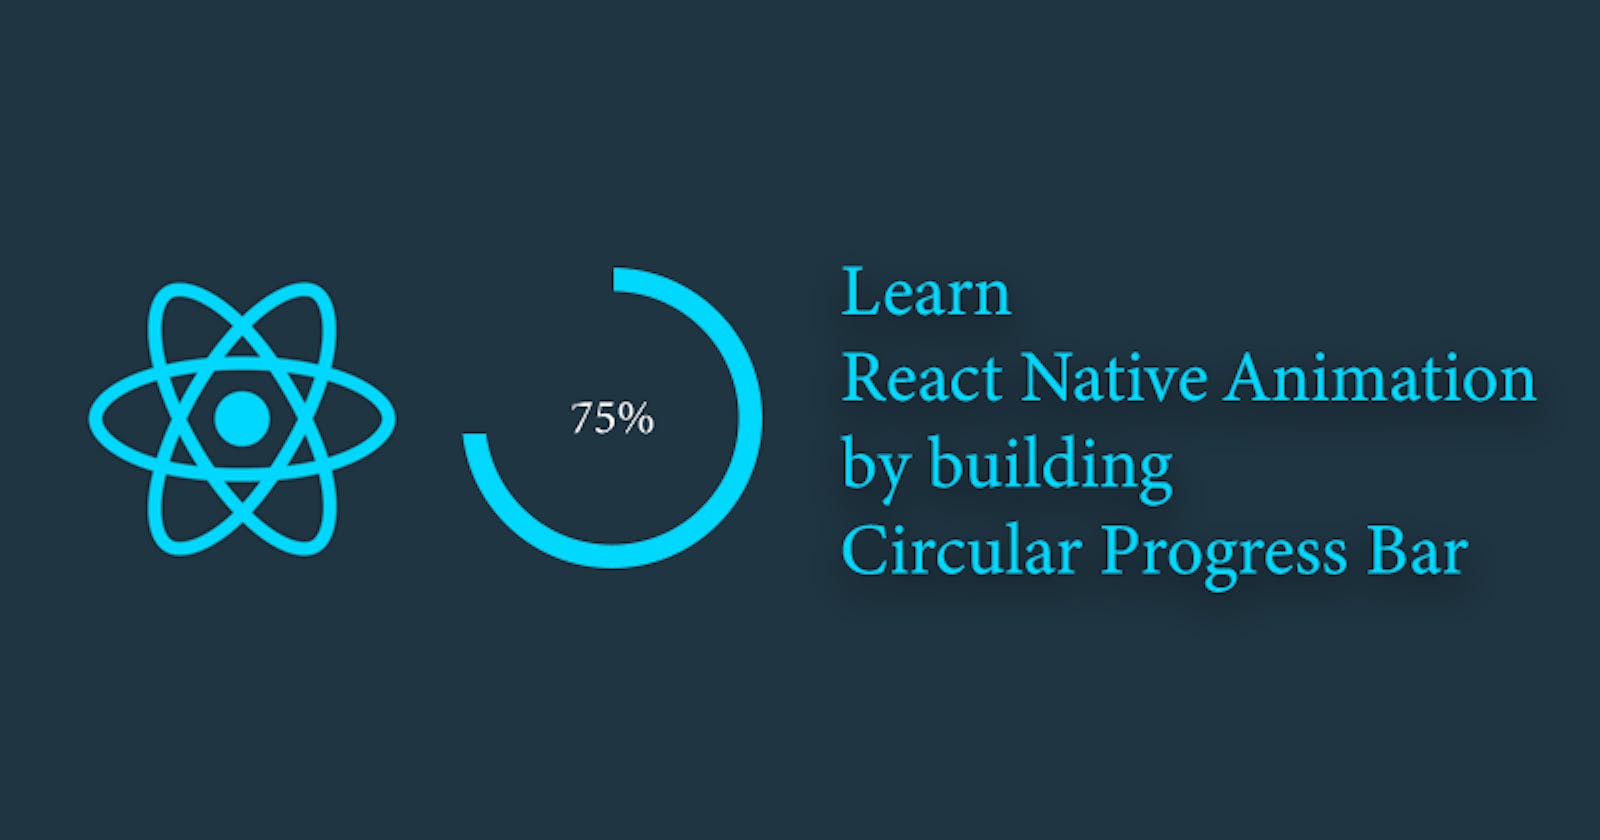 Learn React Native Animation by building Circular Progress Bar